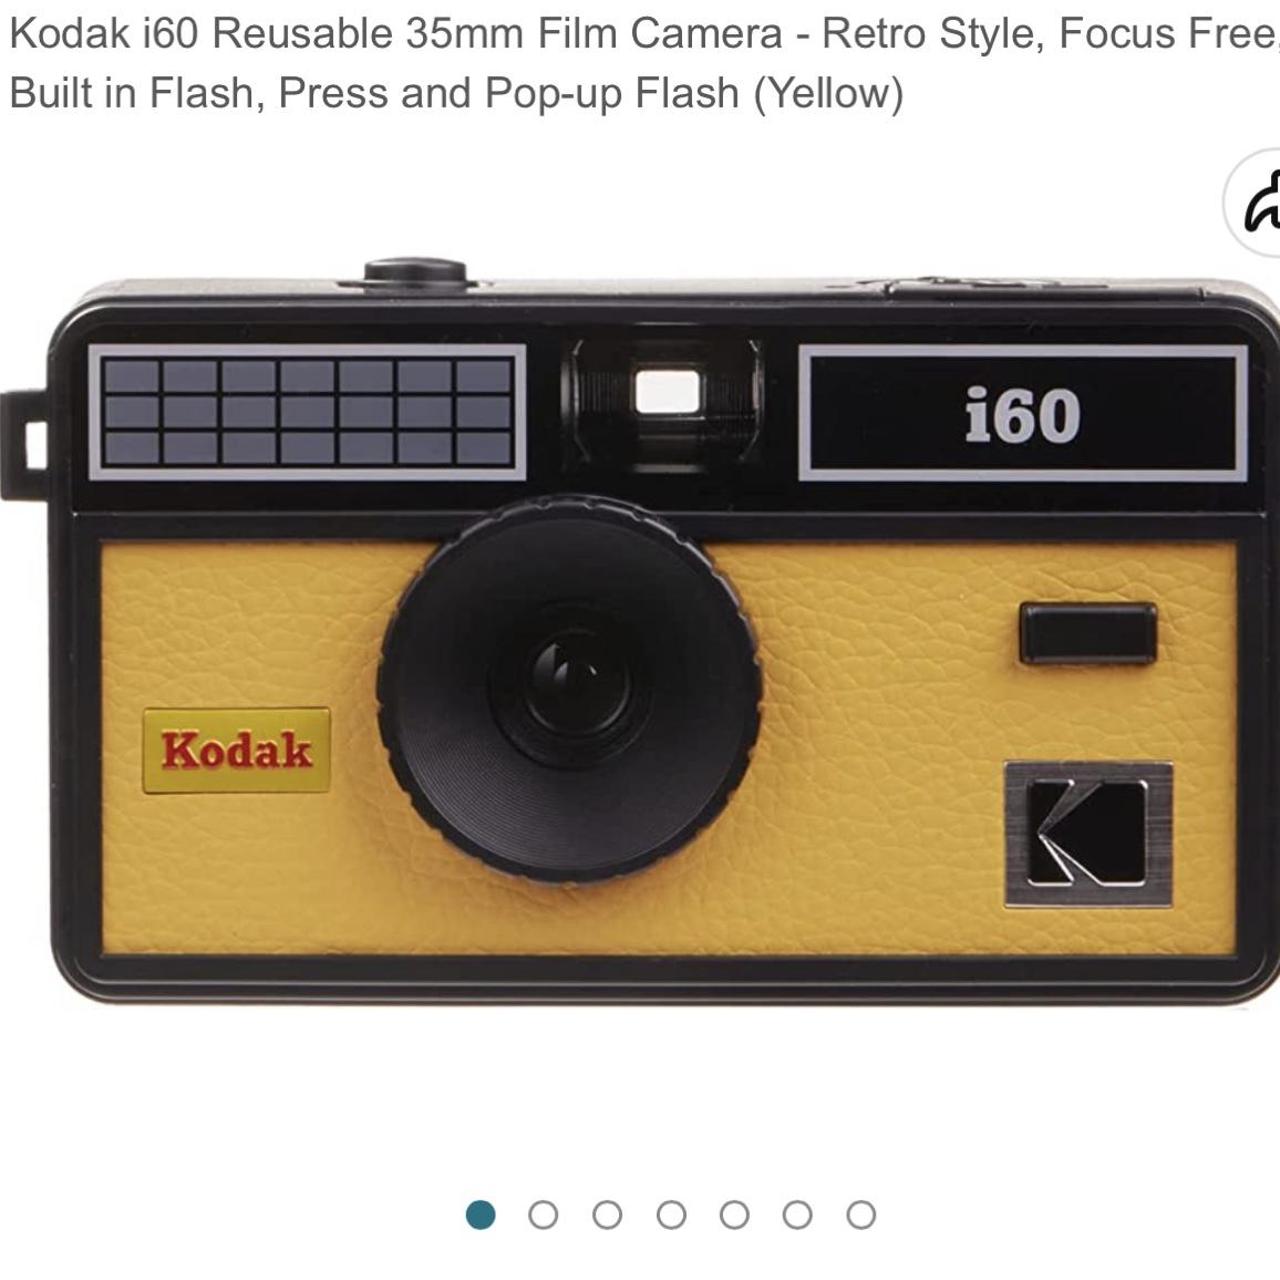  Kodak i60 Reusable 35mm Film Camera - Retro Style